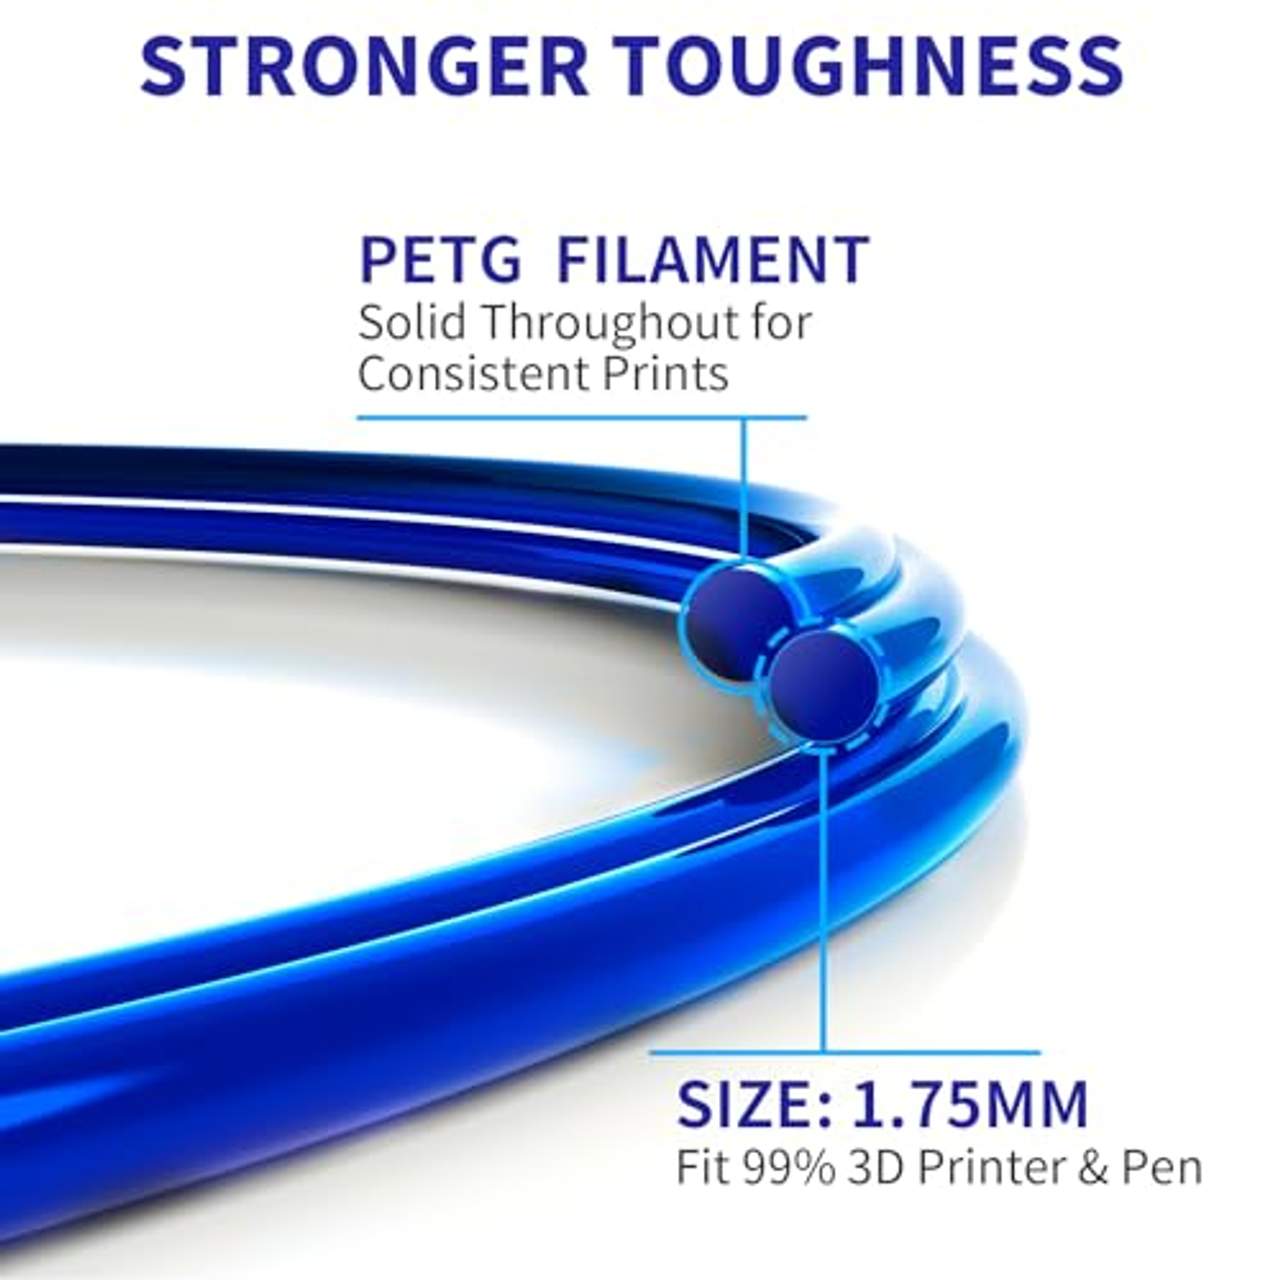 GEEETECH Petg Filament 1.75 mm 1kg Spool